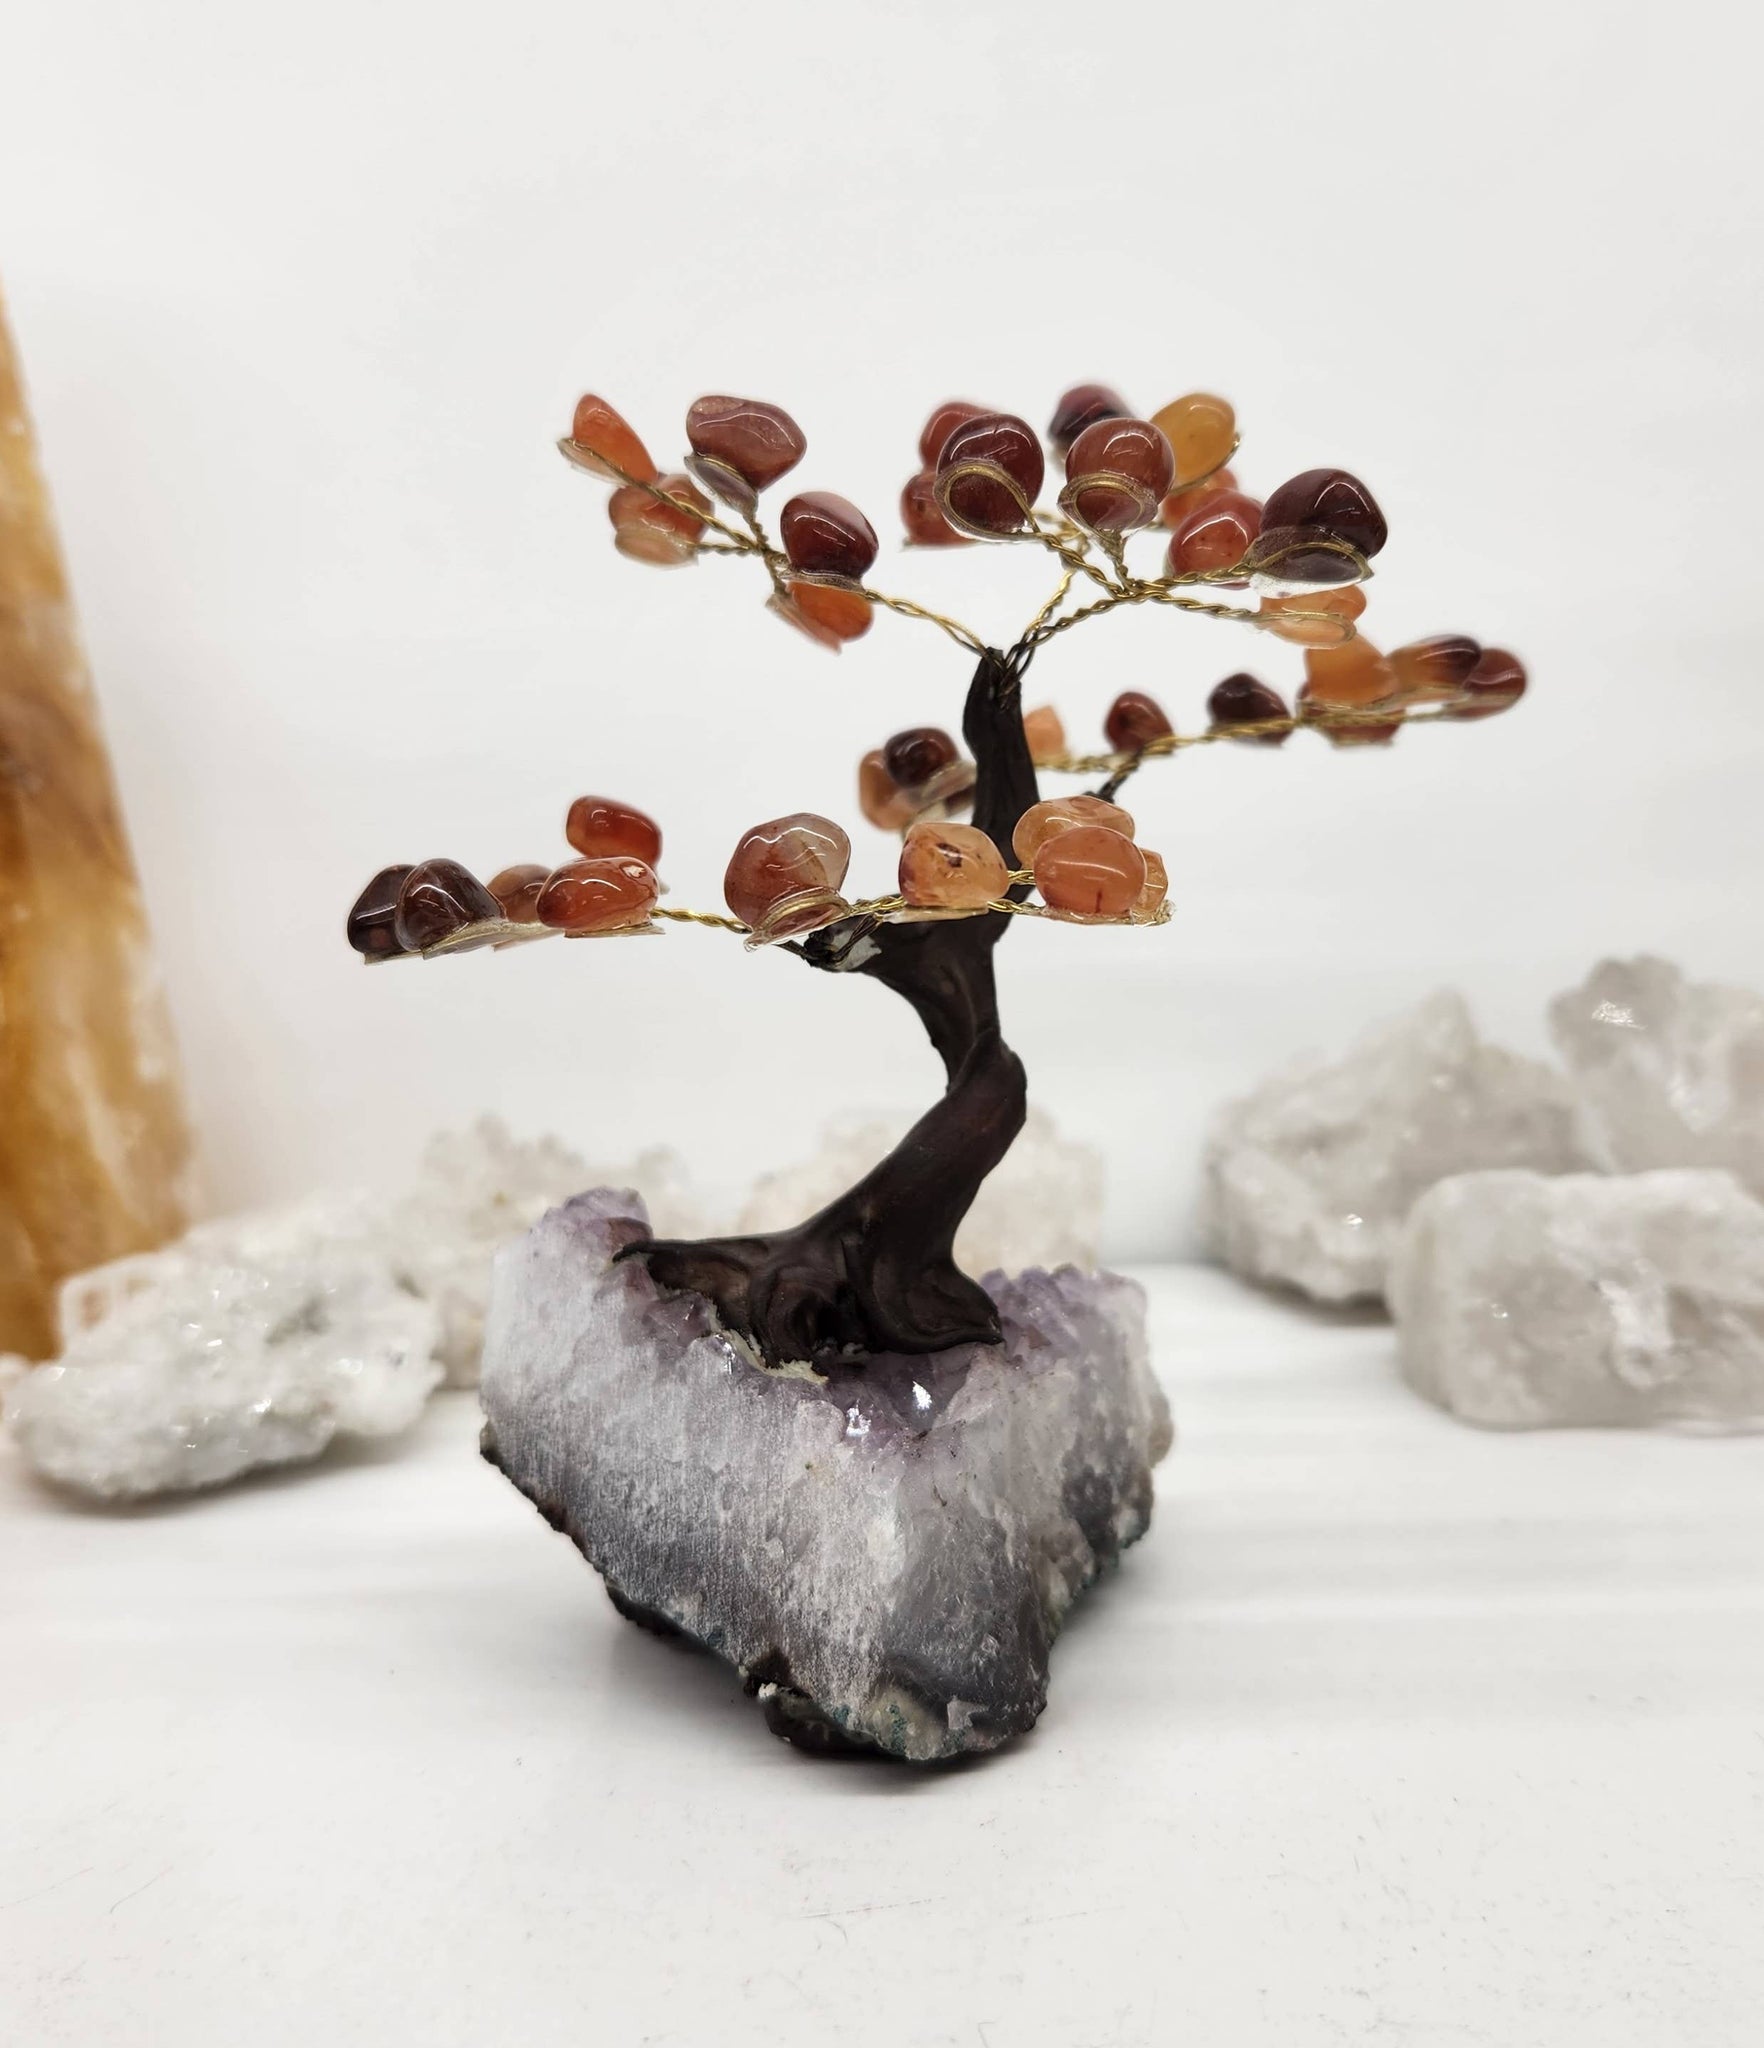 Gemstone Tree - Carnelian with Amethyst Base - 5-6" Tall Meraki Gemstones